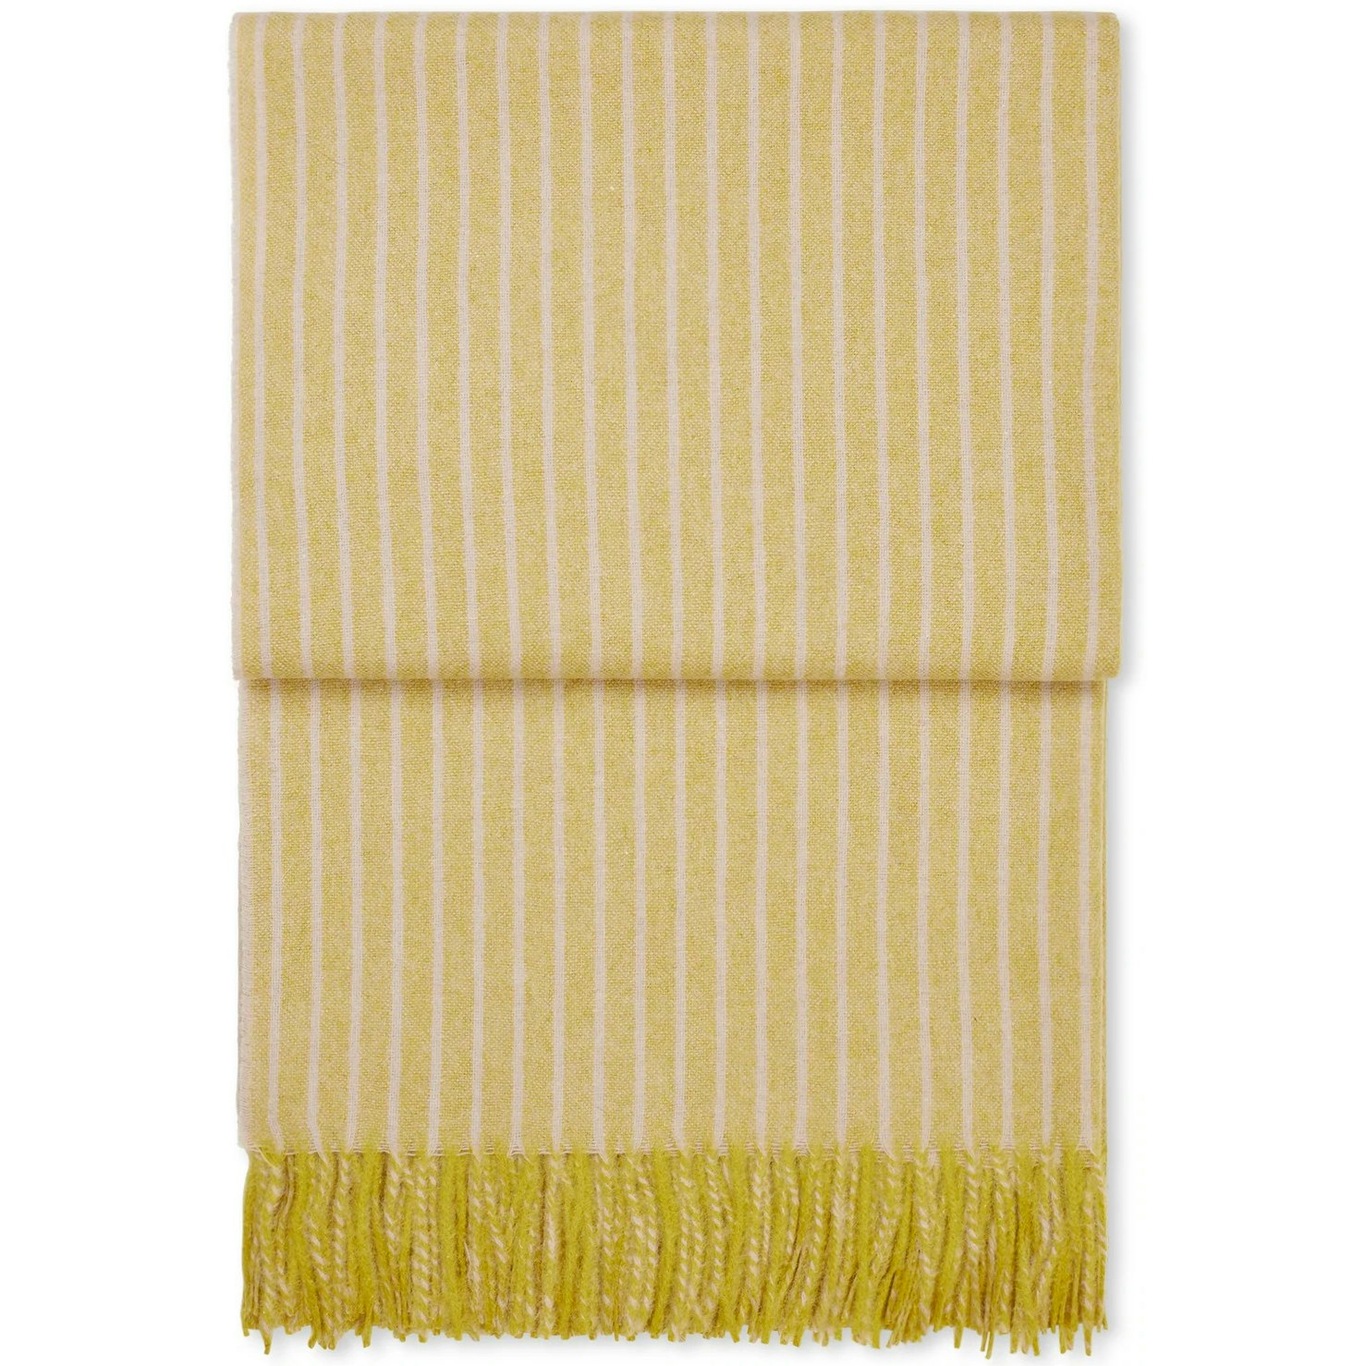 Stripes Throw 130x200 cm, Light Yellow